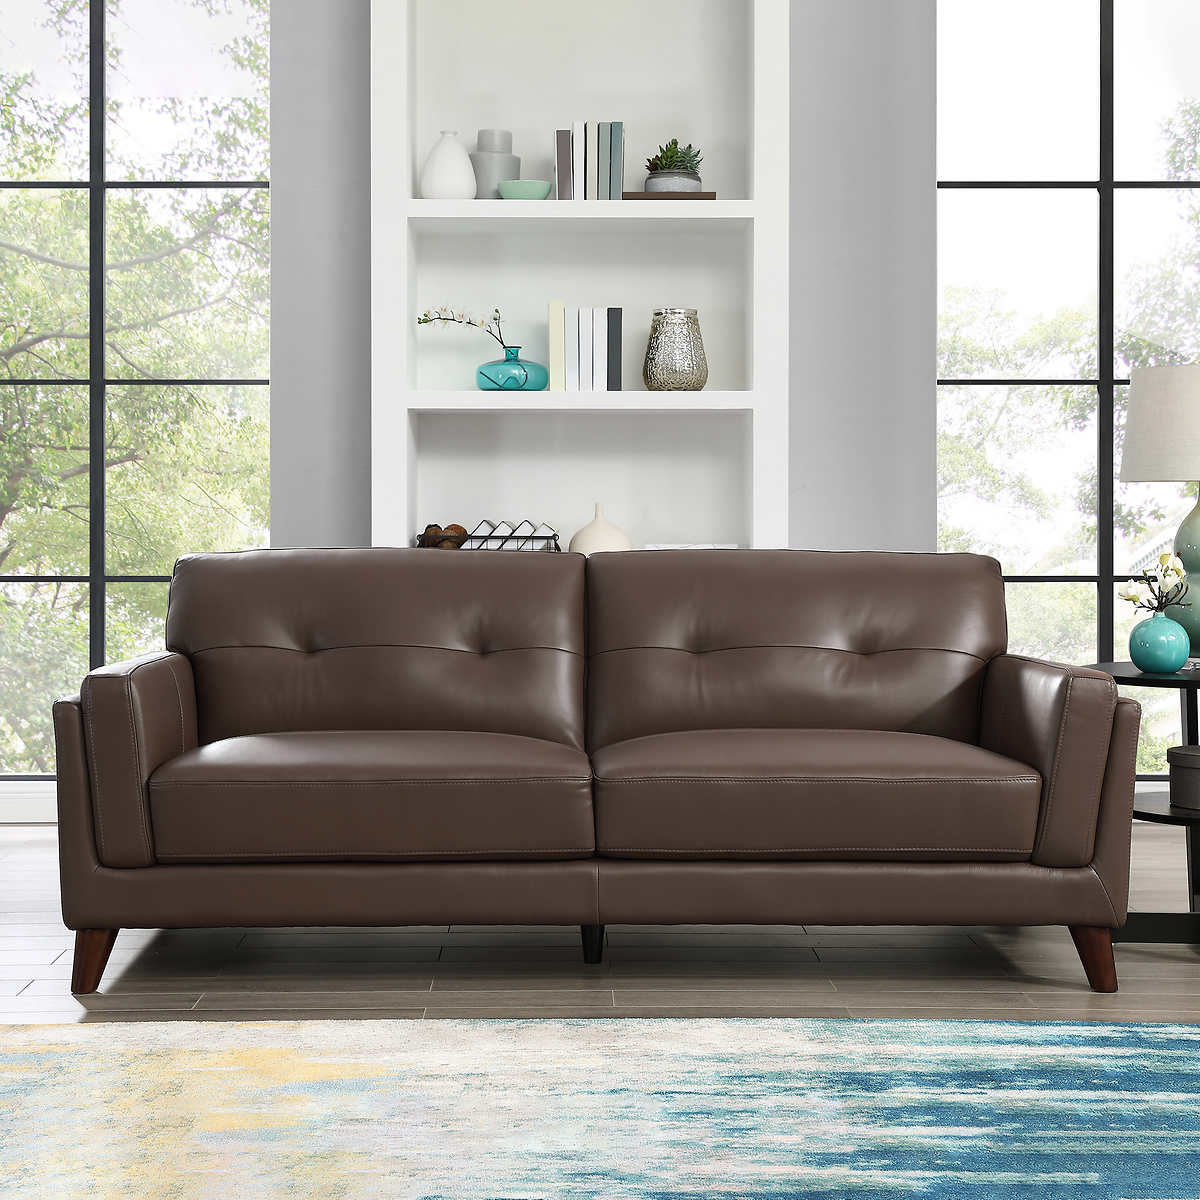 Monterey Top Grain Leather Sofa Costco, Is Costco Leather Furniture Good Quality